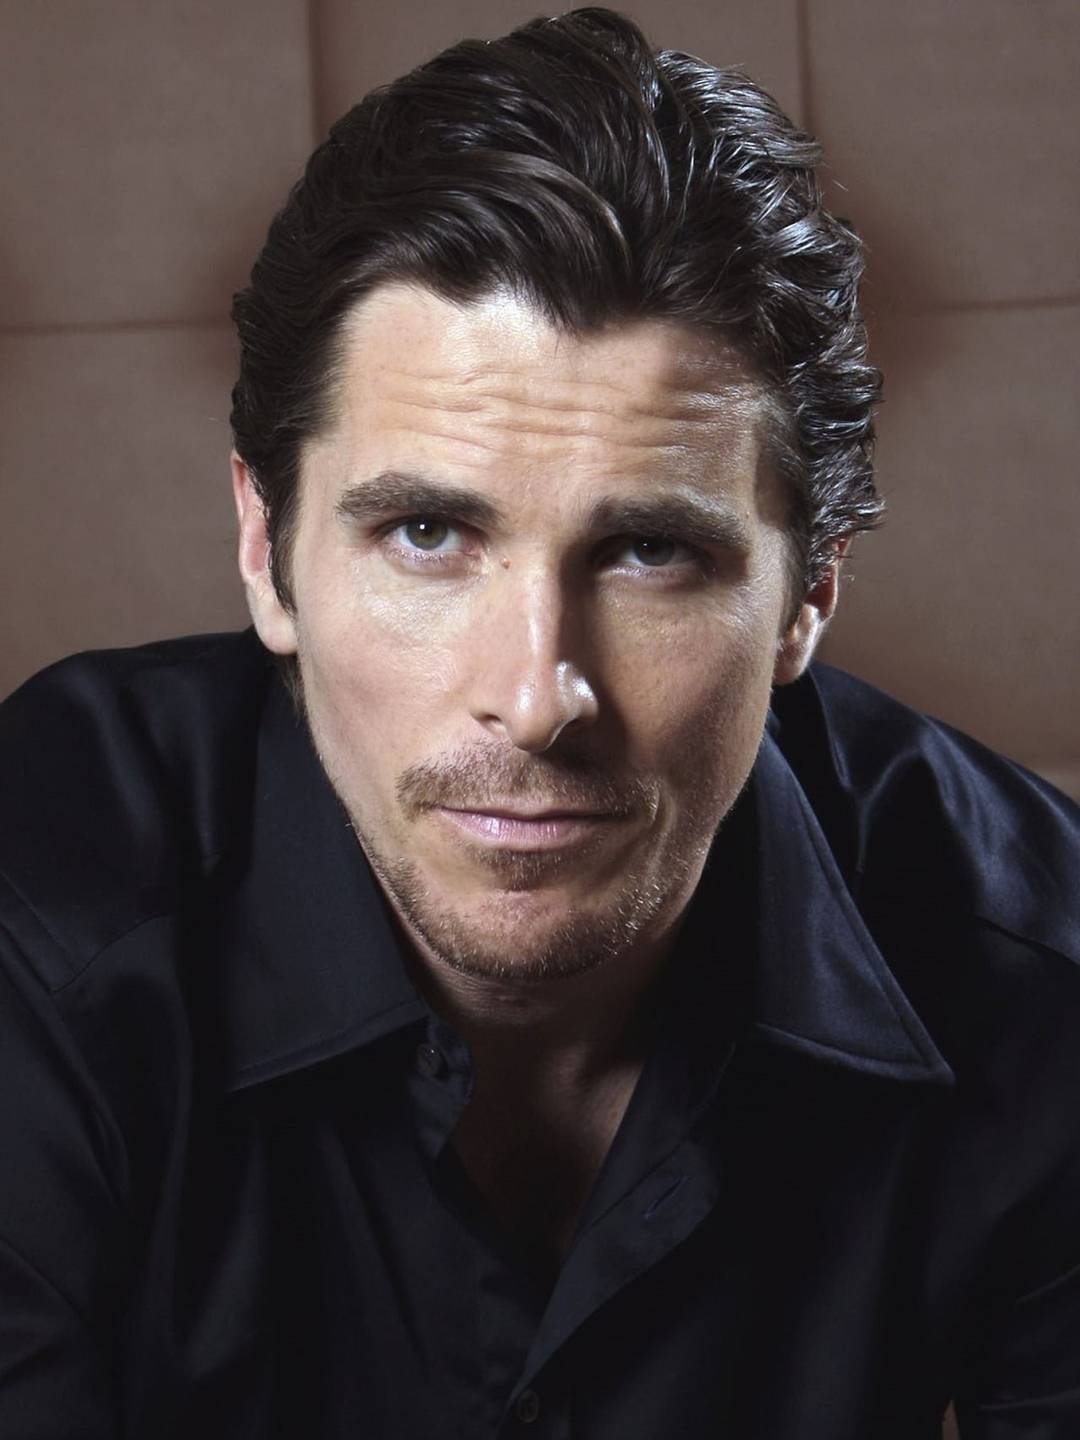 Christian Bale life path